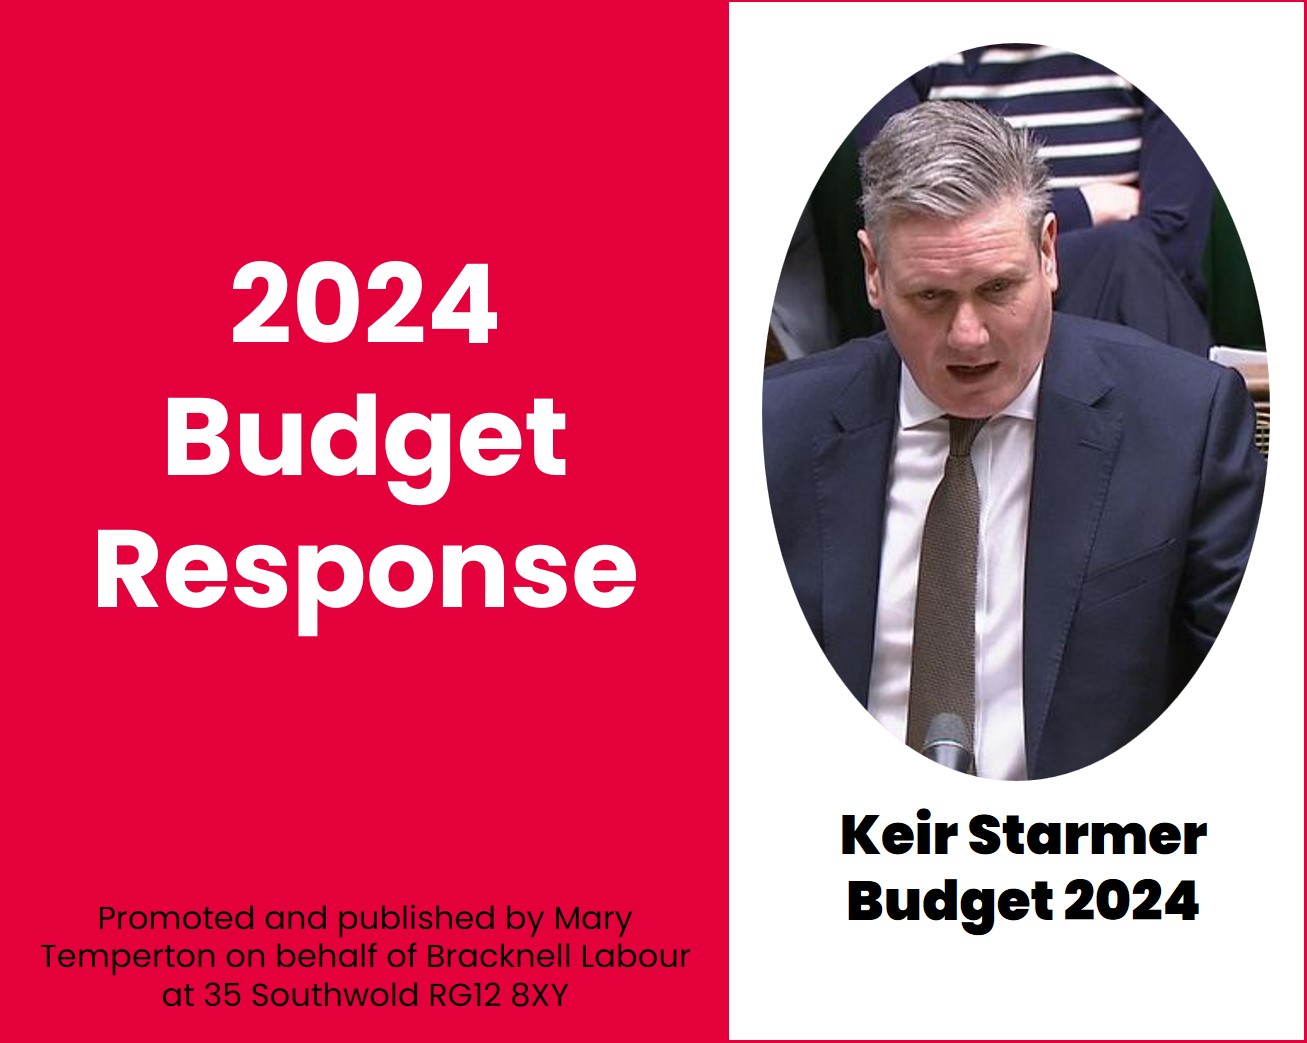 keir starmer budget response 2024